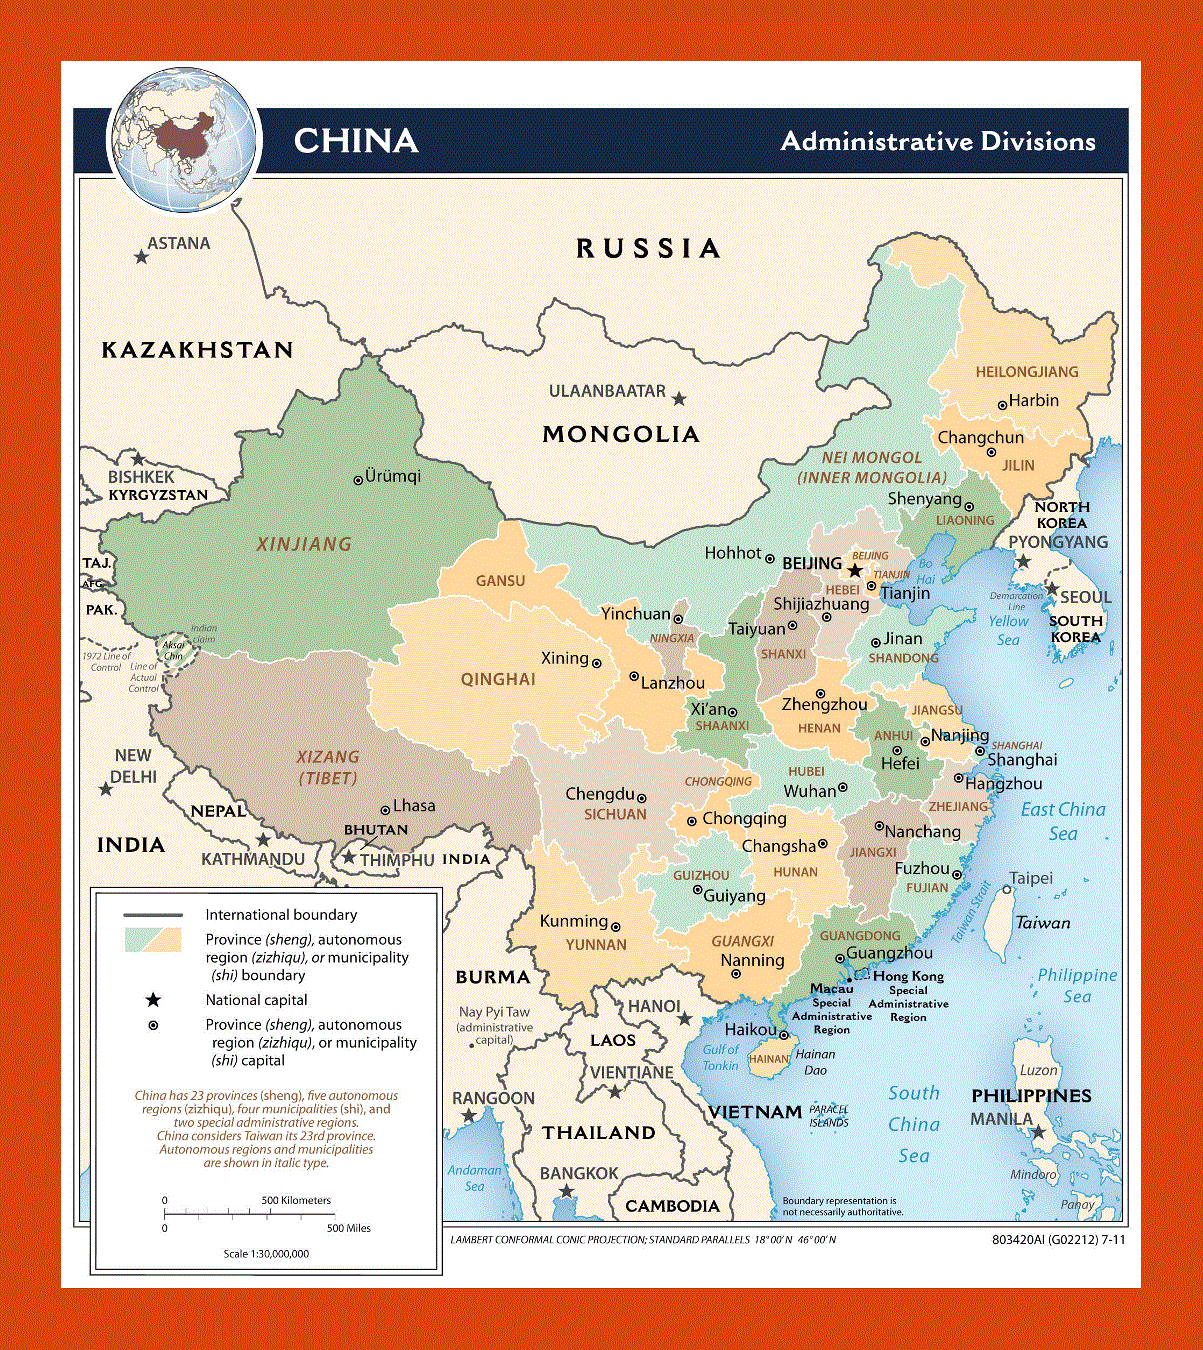 Administrative divisions map of China - 2011